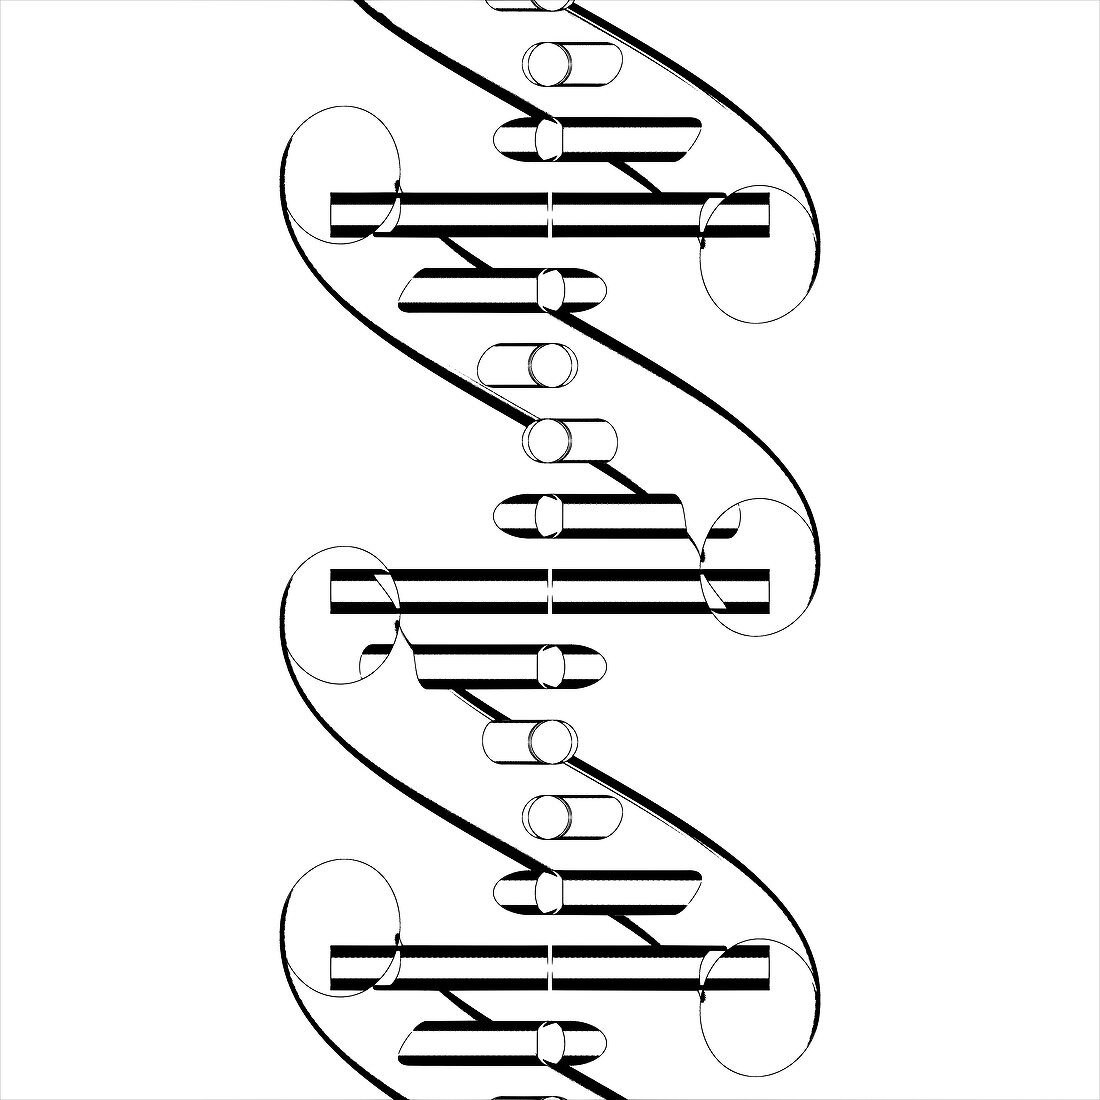 DNA molecule,illustration